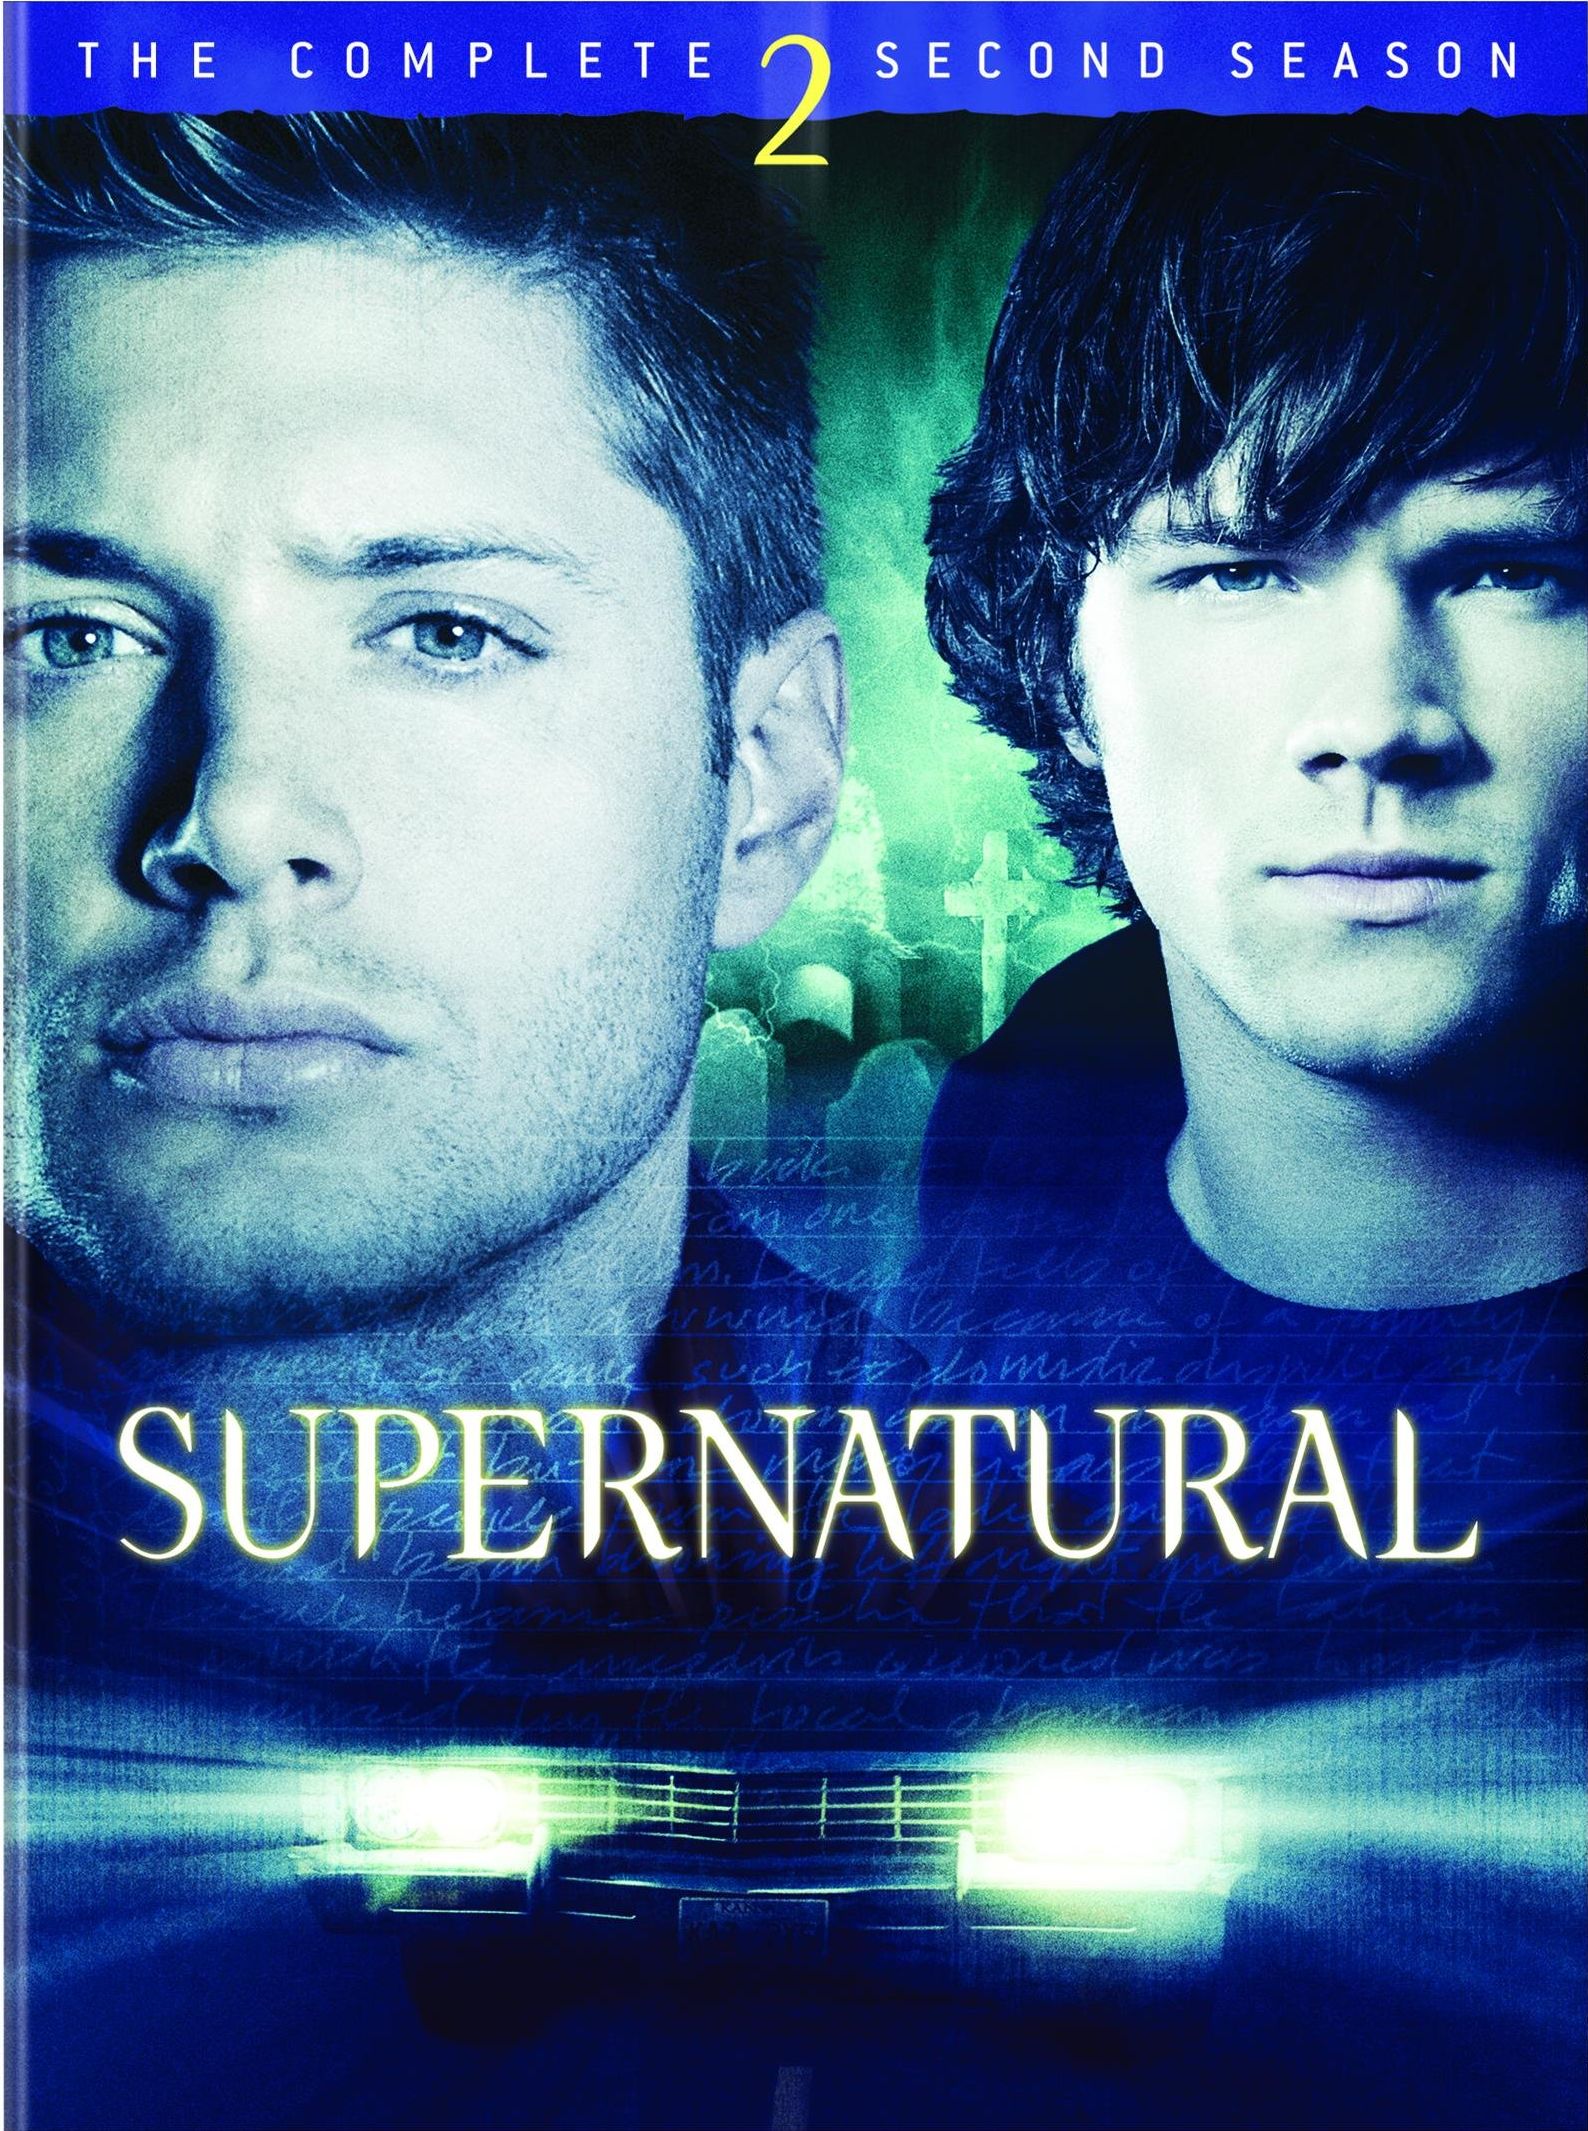 Supernatural DVD Release Date